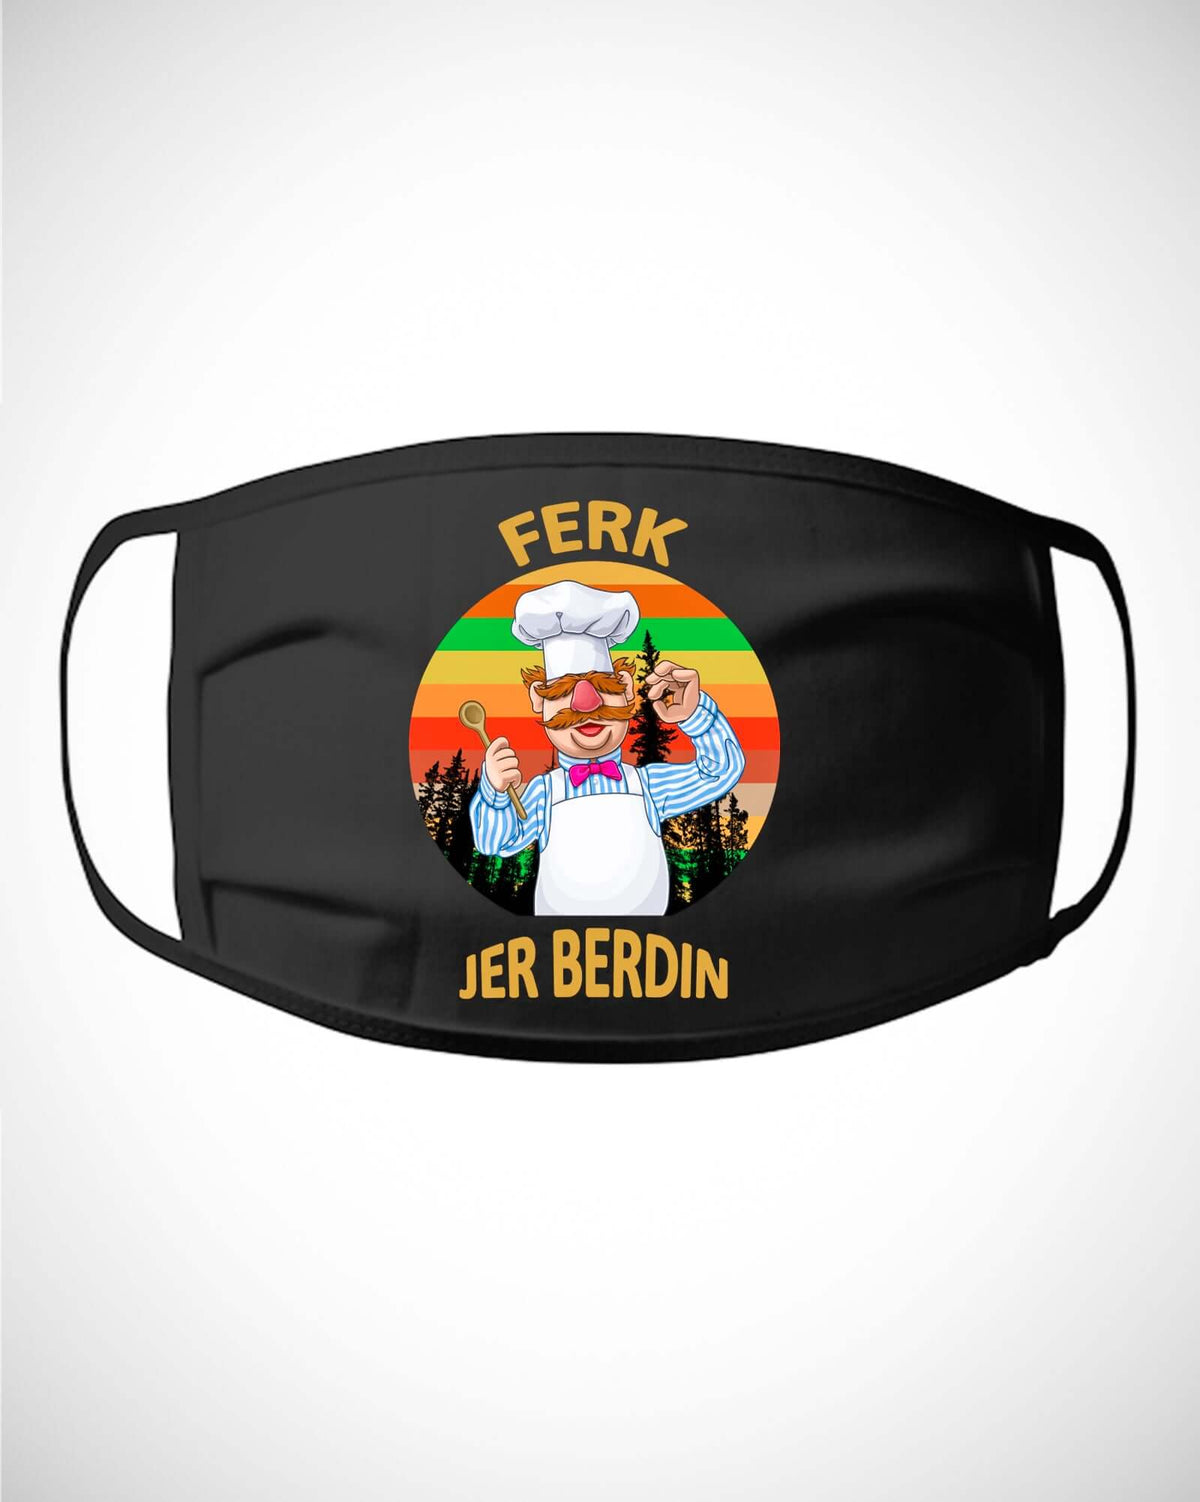 Ferk Jer Berdin Cotton Mask - ApparelinClick